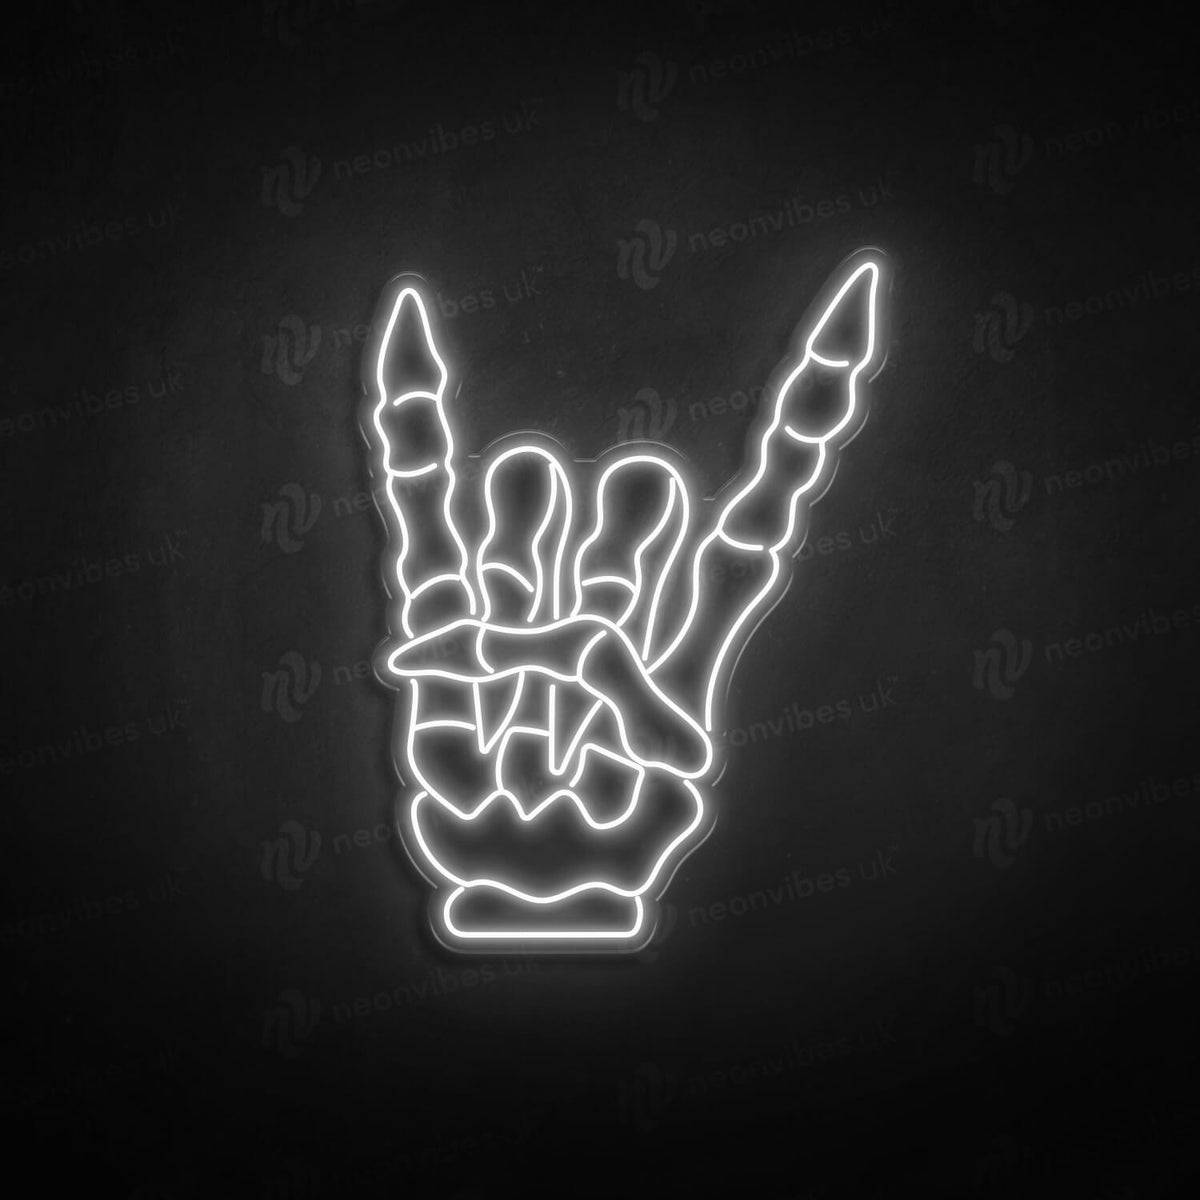 Skeleton Rock hand neon sign